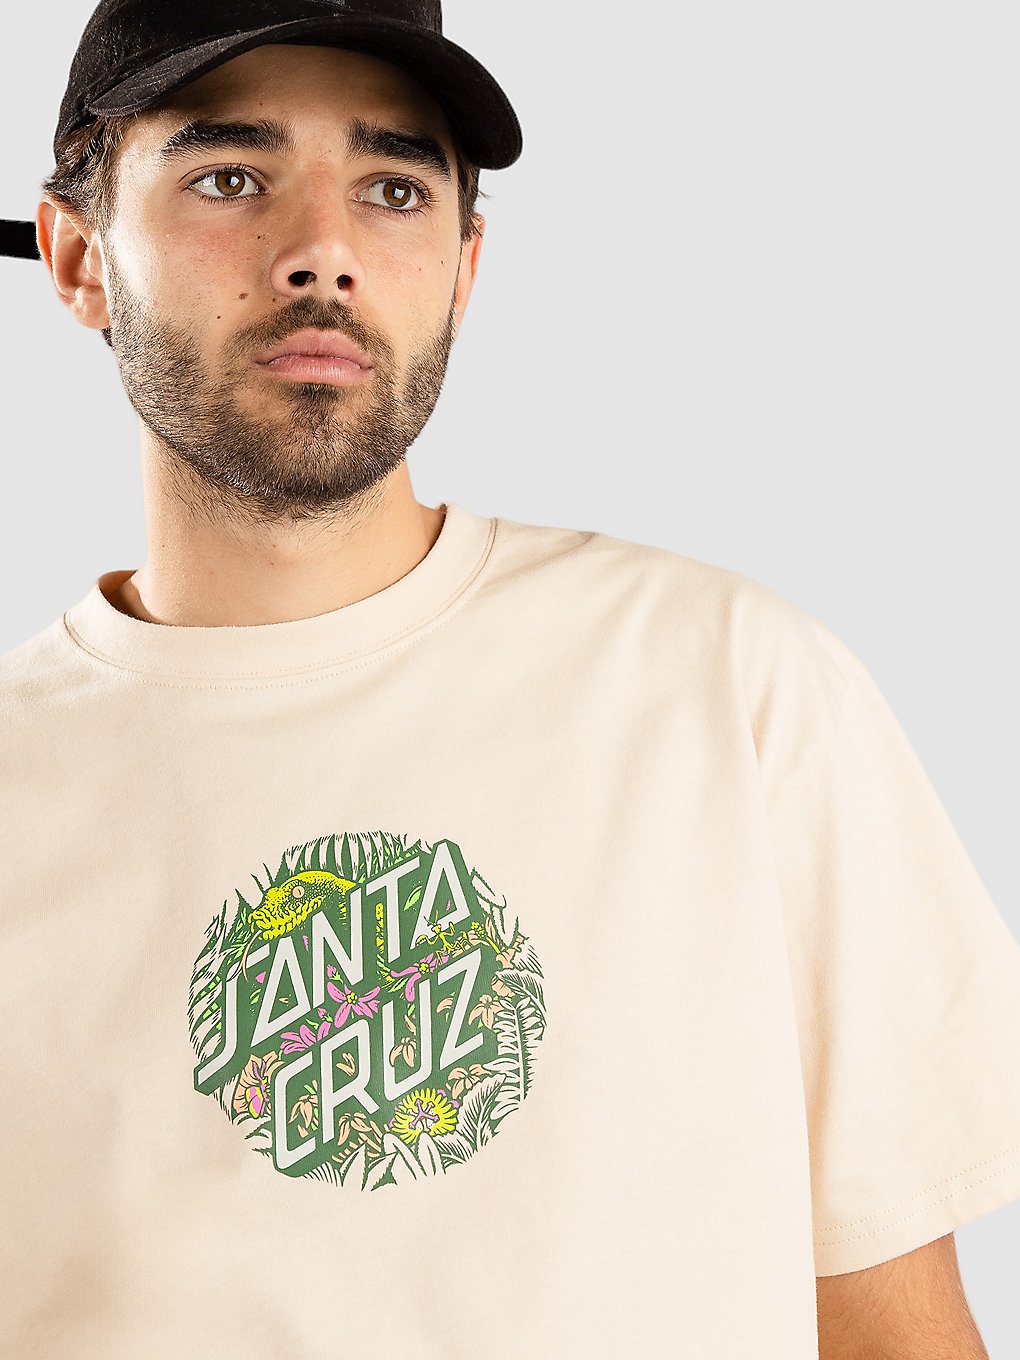 Santa Cruz Asp Flores Dot Front T-Shirt oat kaufen